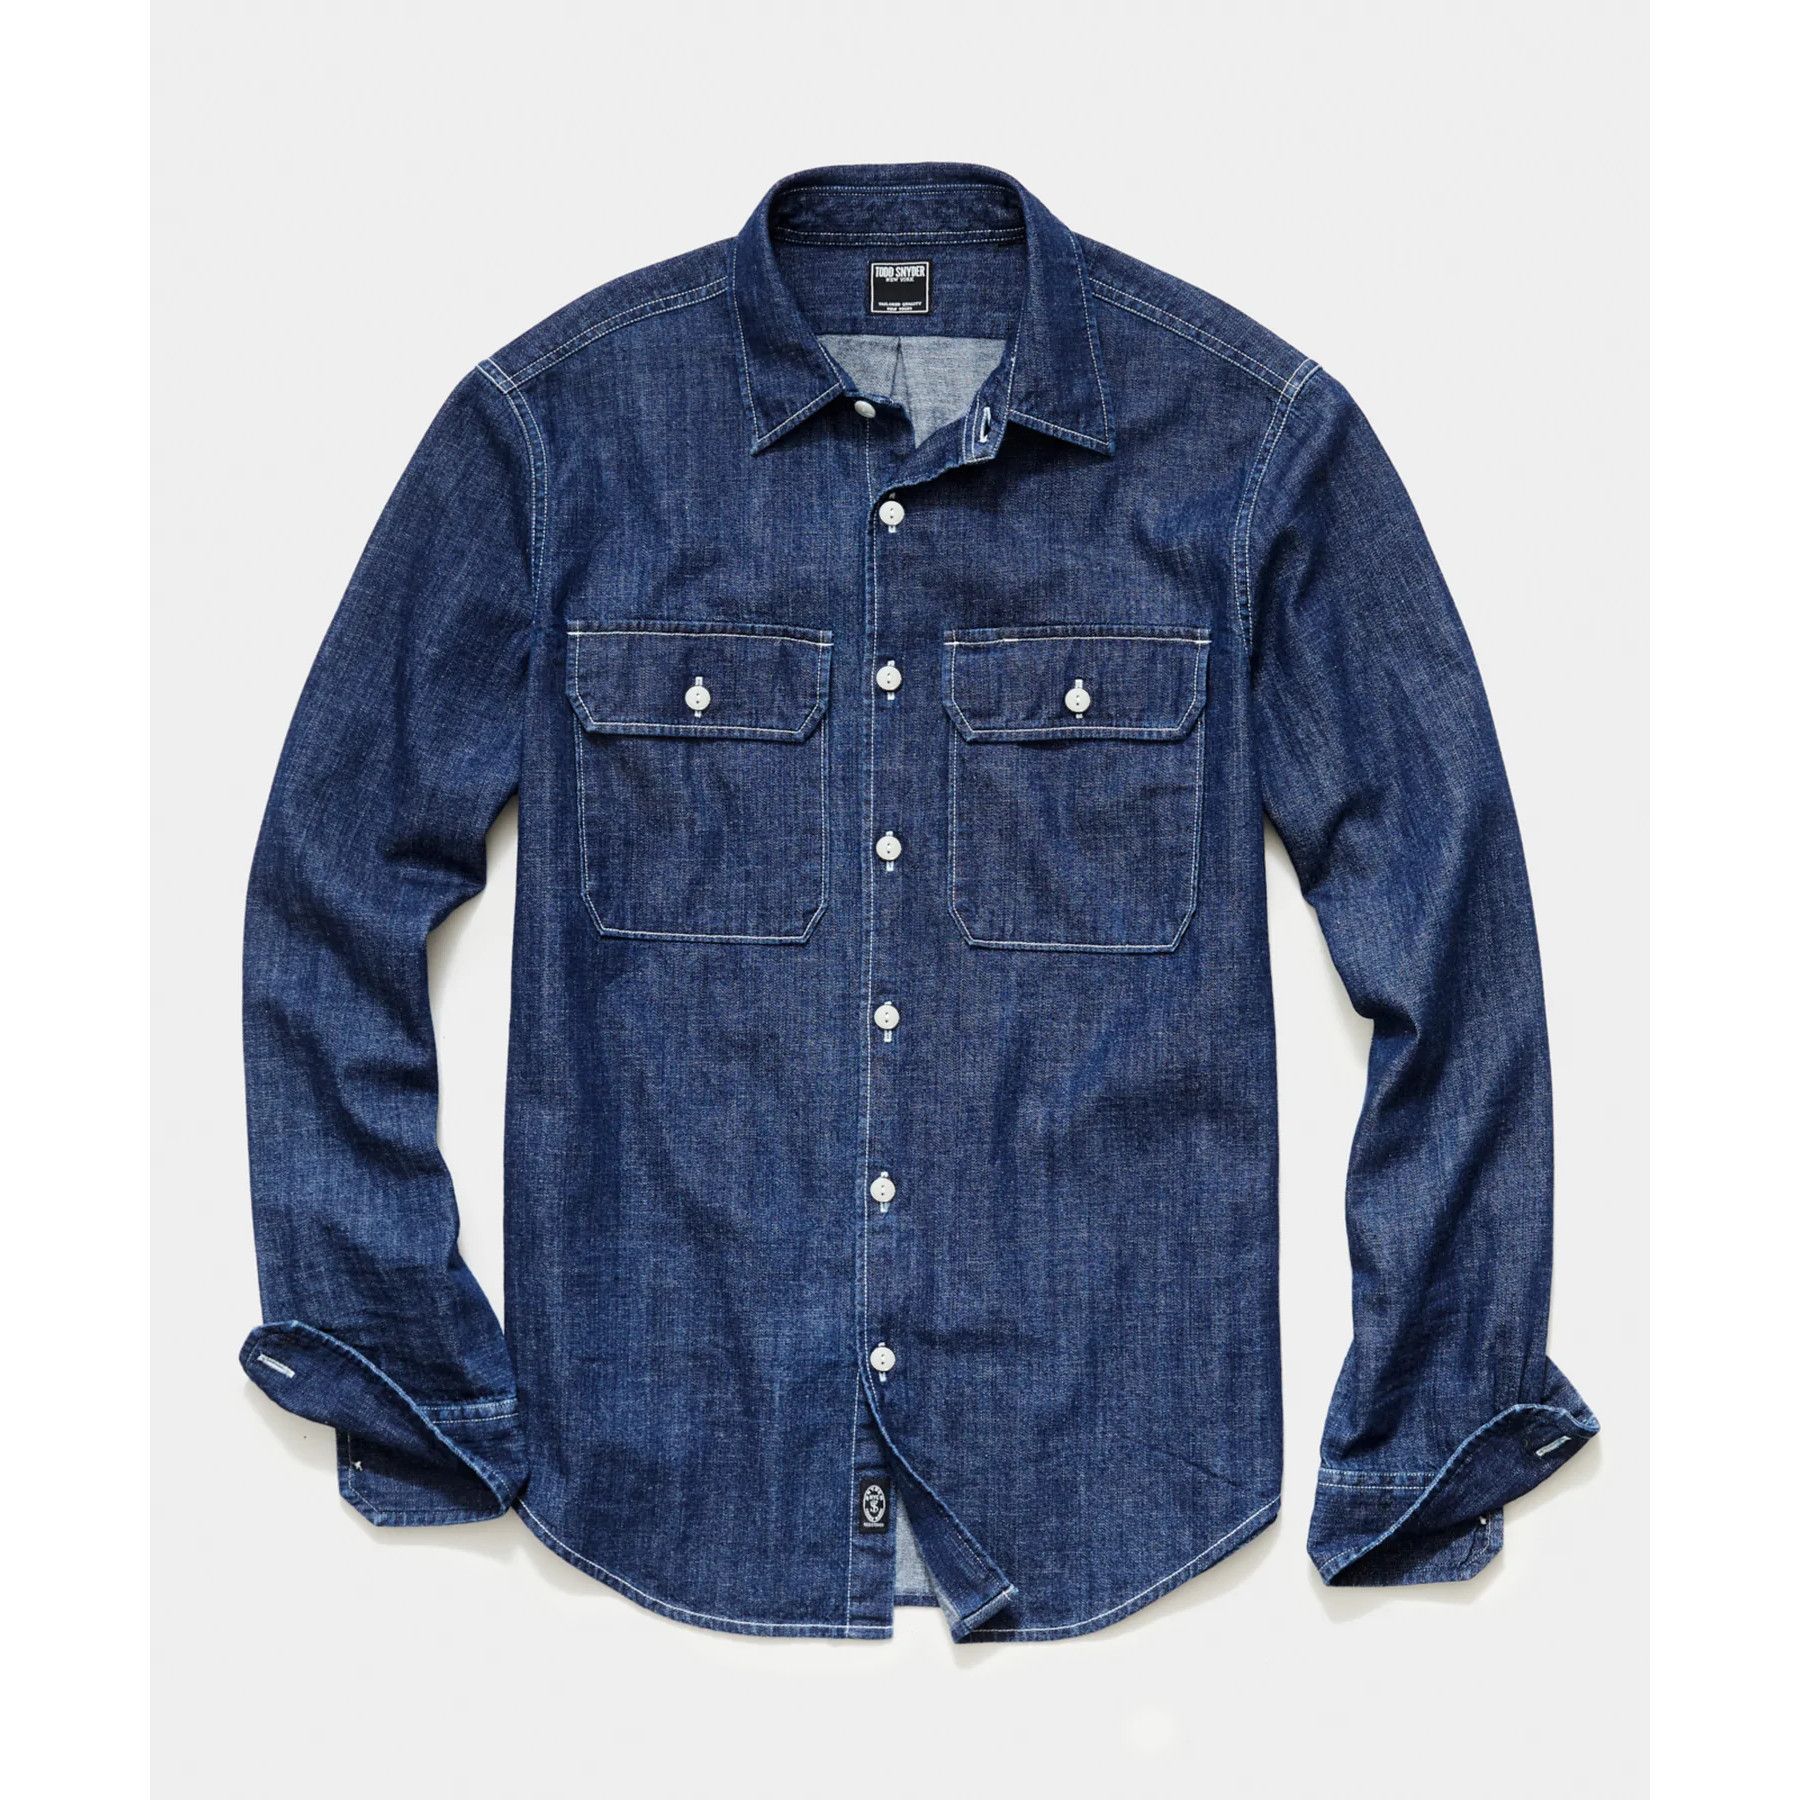 Wrangler Men's Denim Shirt Rugged Wear Long Sleeve, Two - Pocket, Button  Sz. XL | eBay